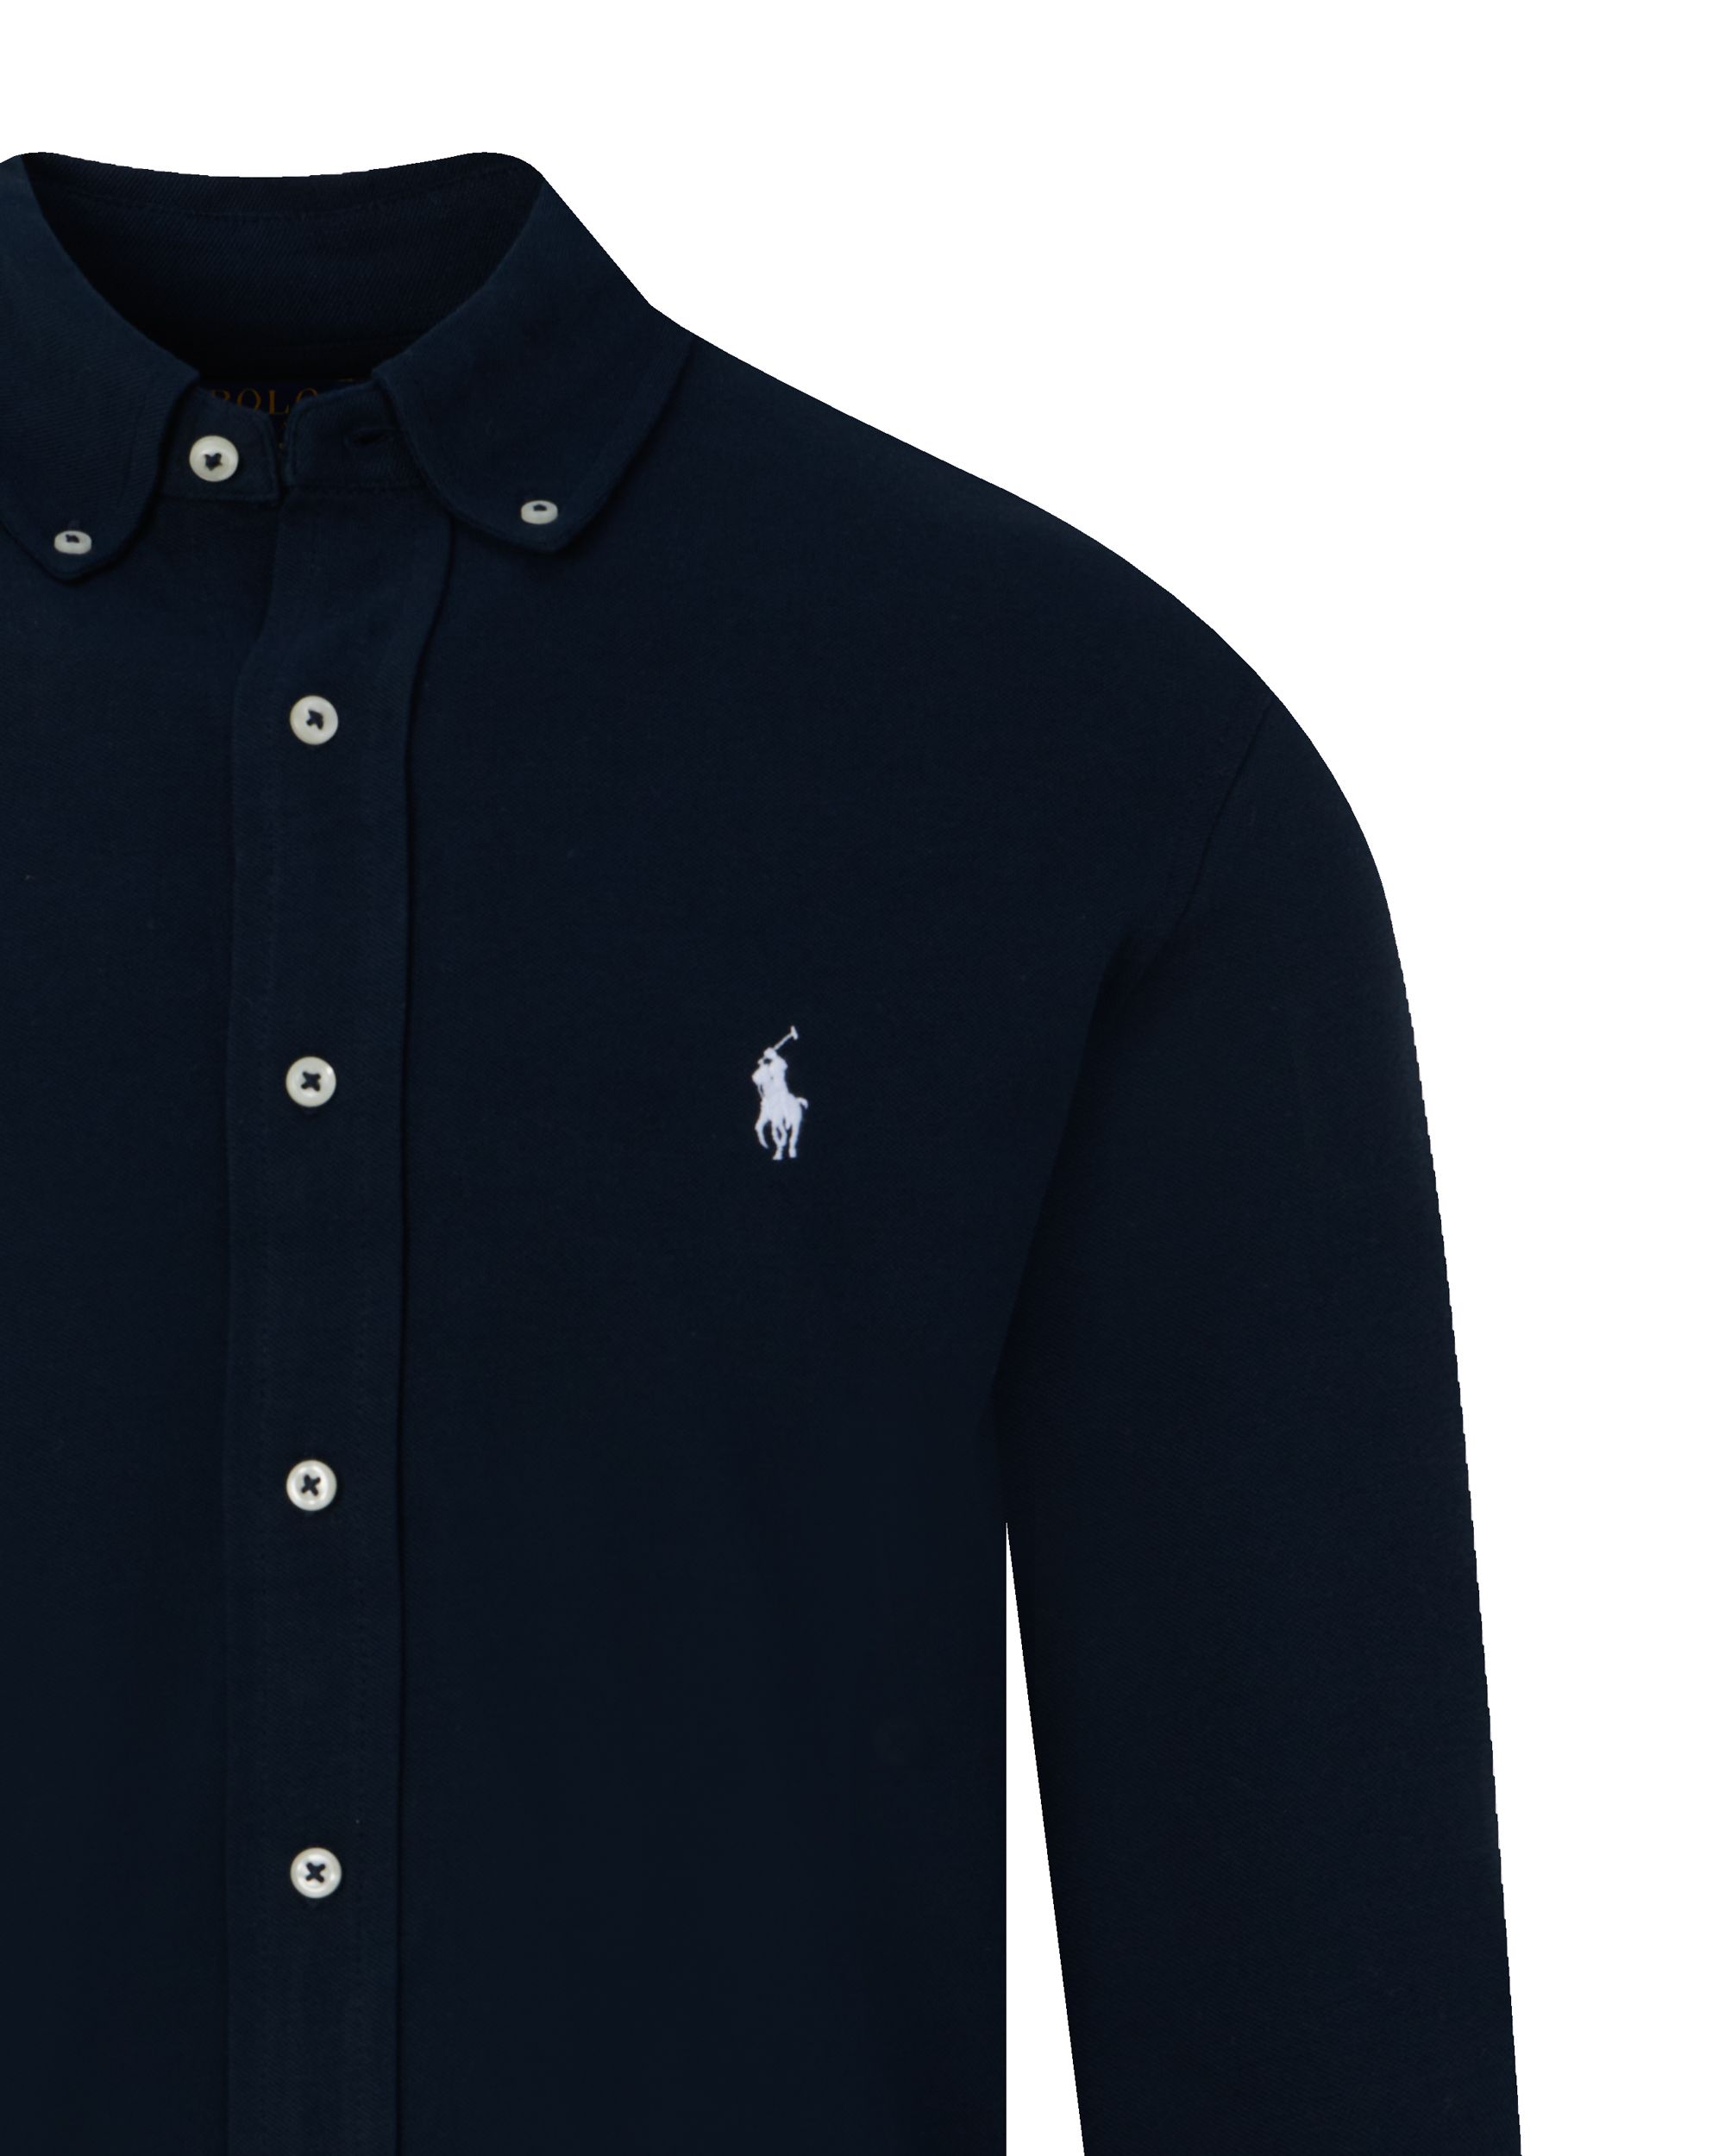 Polo Ralph Lauren Casual Overhemd LM Donker blauw 095319-001-L